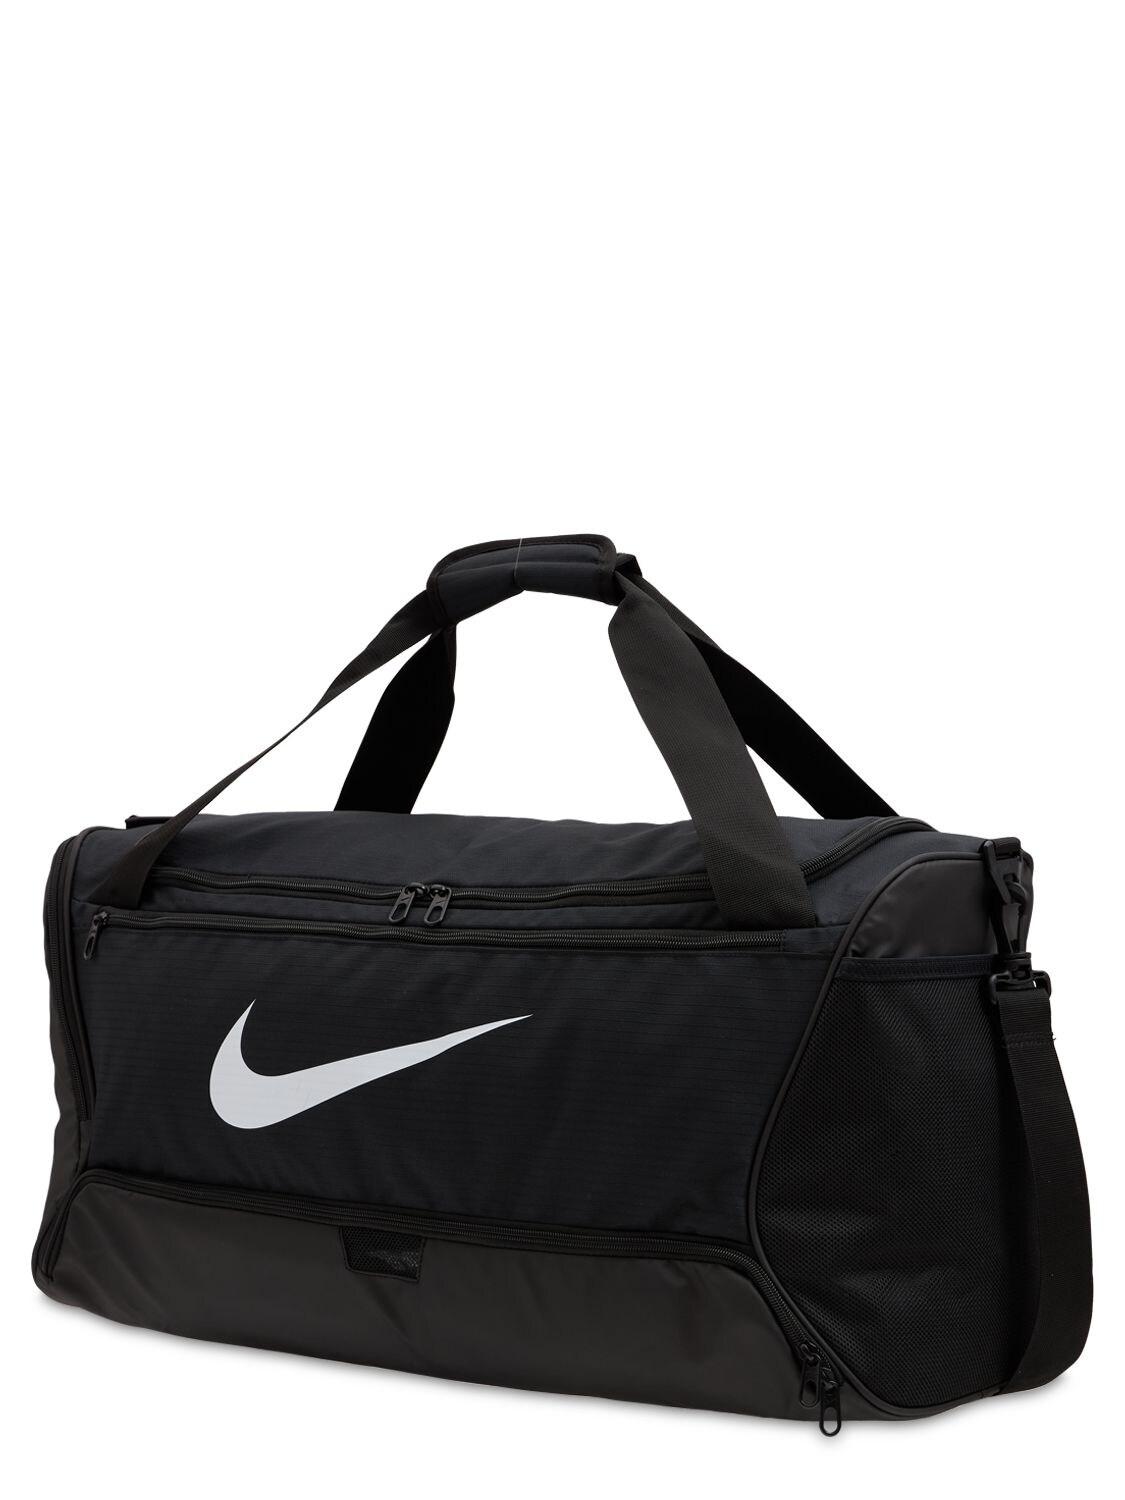 Nike Medium Training Duffle Bag in Black - Lyst